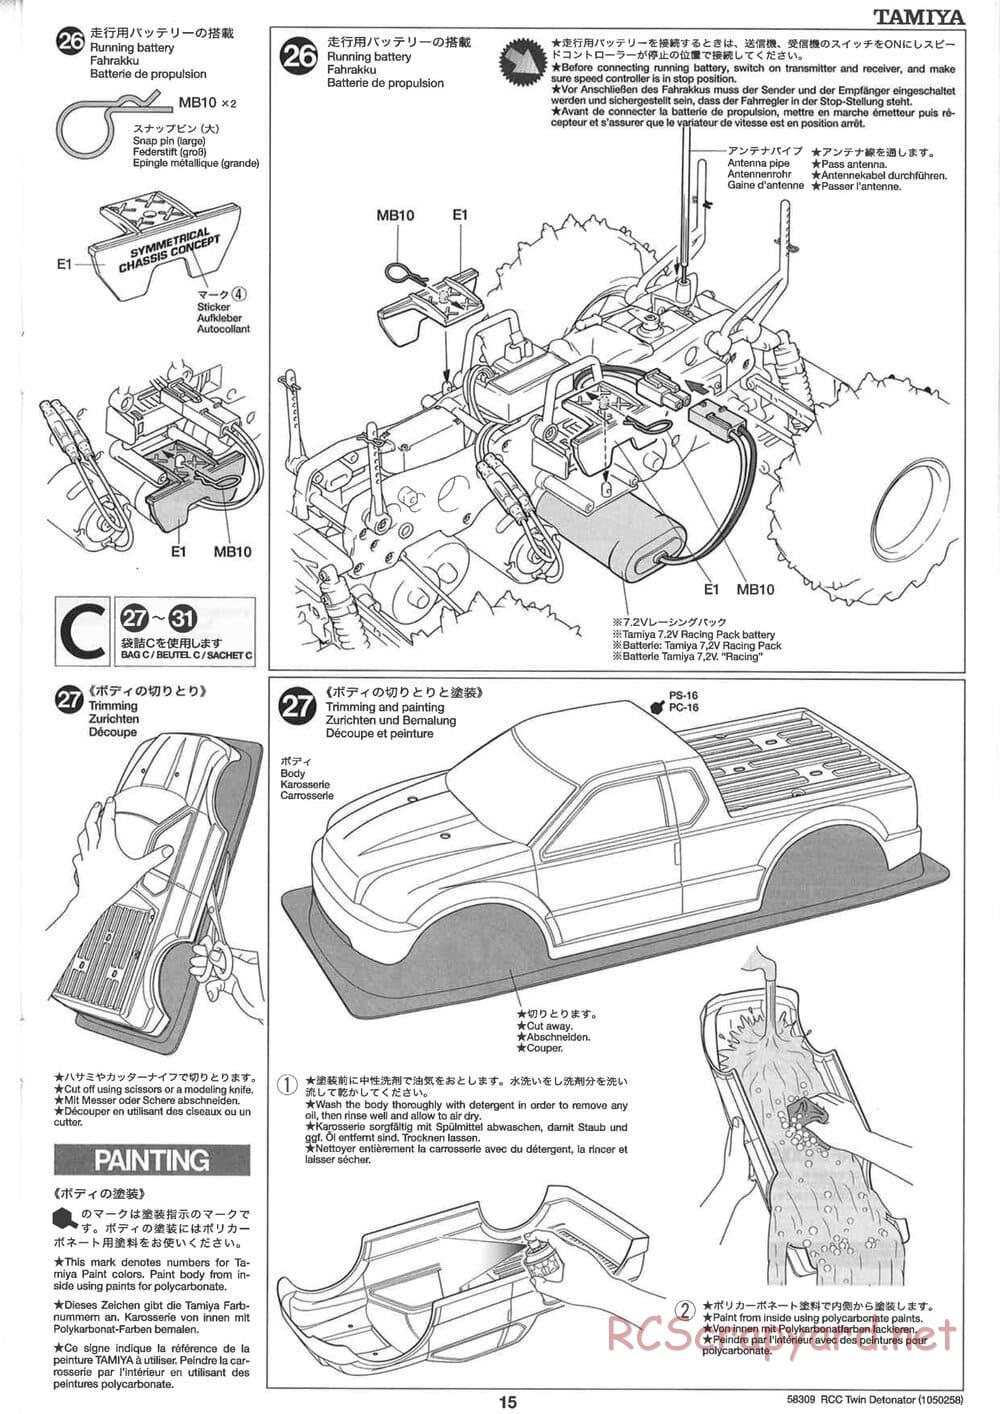 Tamiya - Twin Detonator - WR-01 Chassis - Manual - Page 15